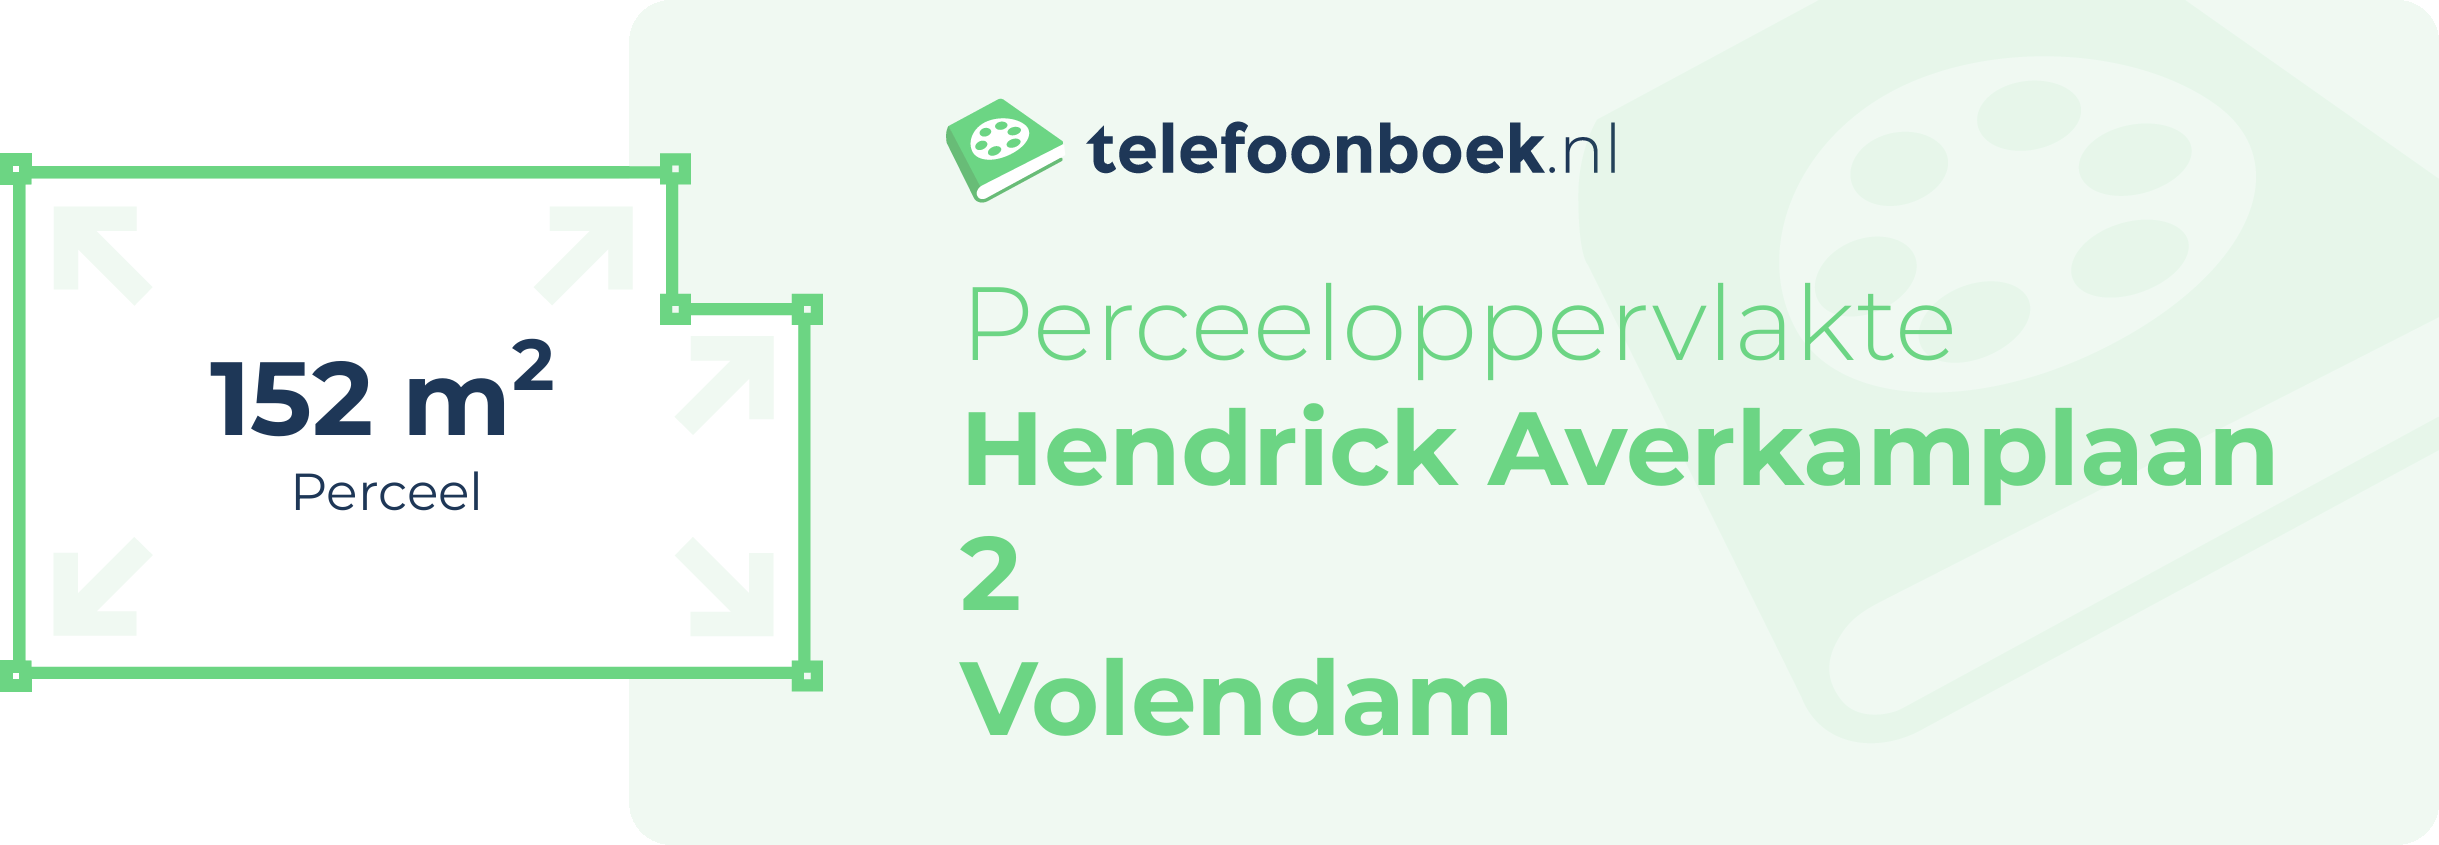 Perceeloppervlakte Hendrick Averkamplaan 2 Volendam